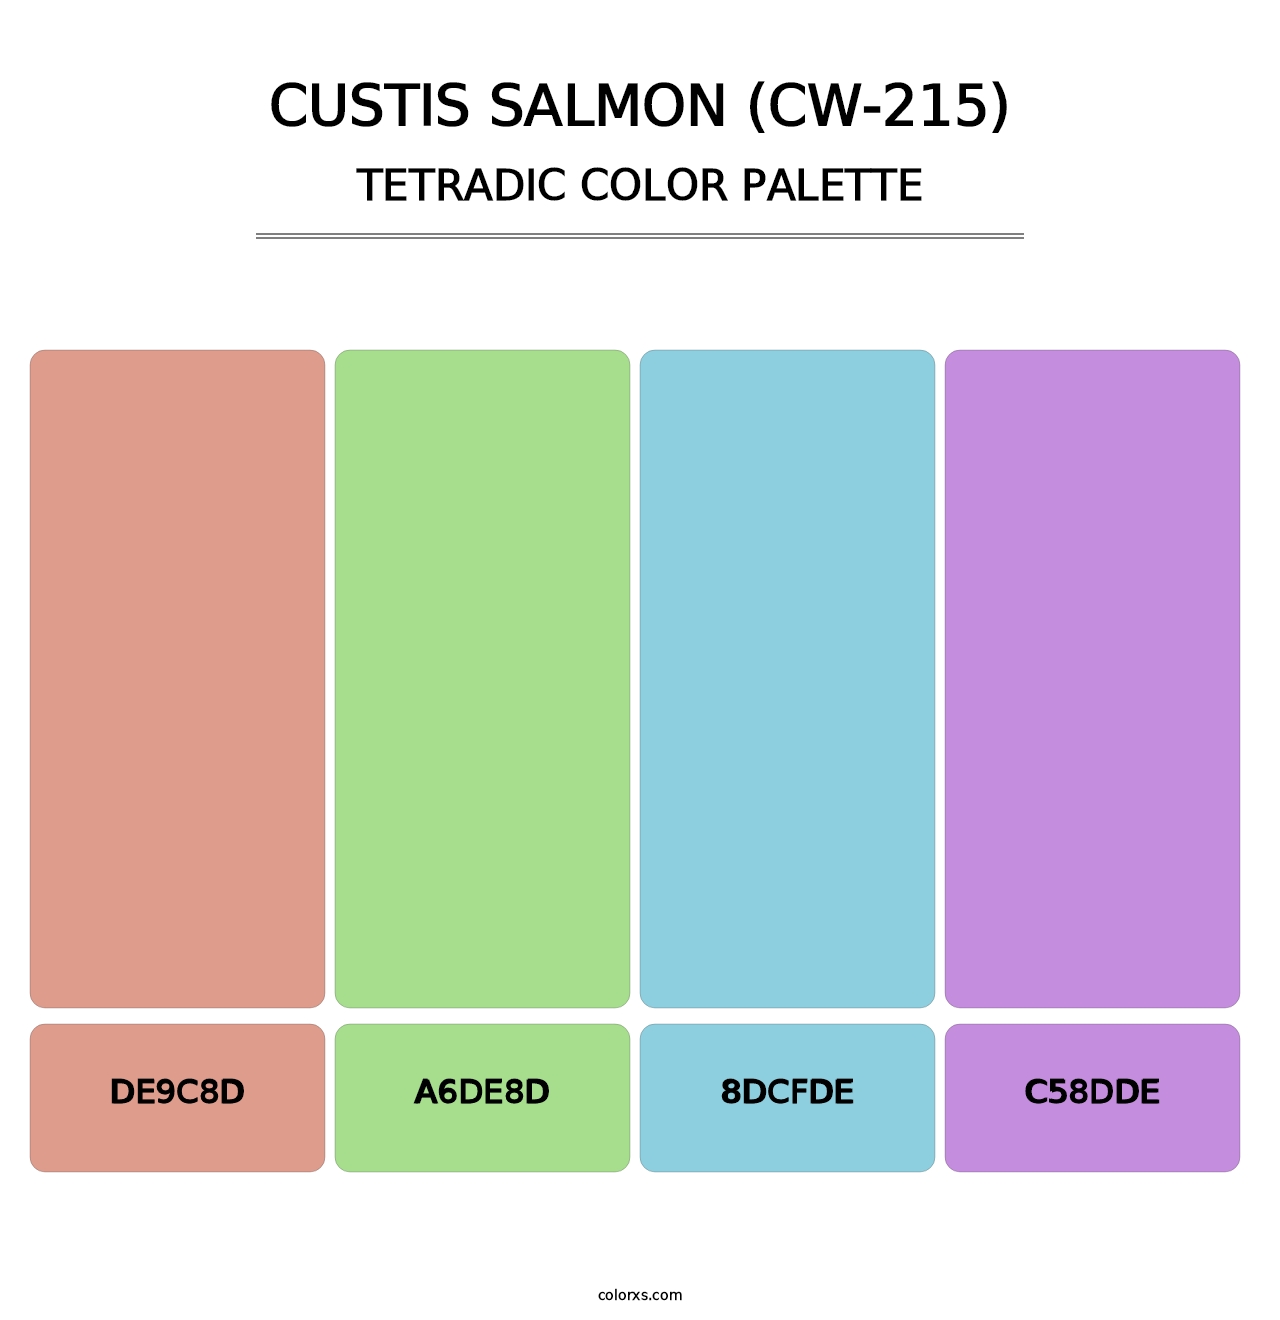 Custis Salmon (CW-215) - Tetradic Color Palette